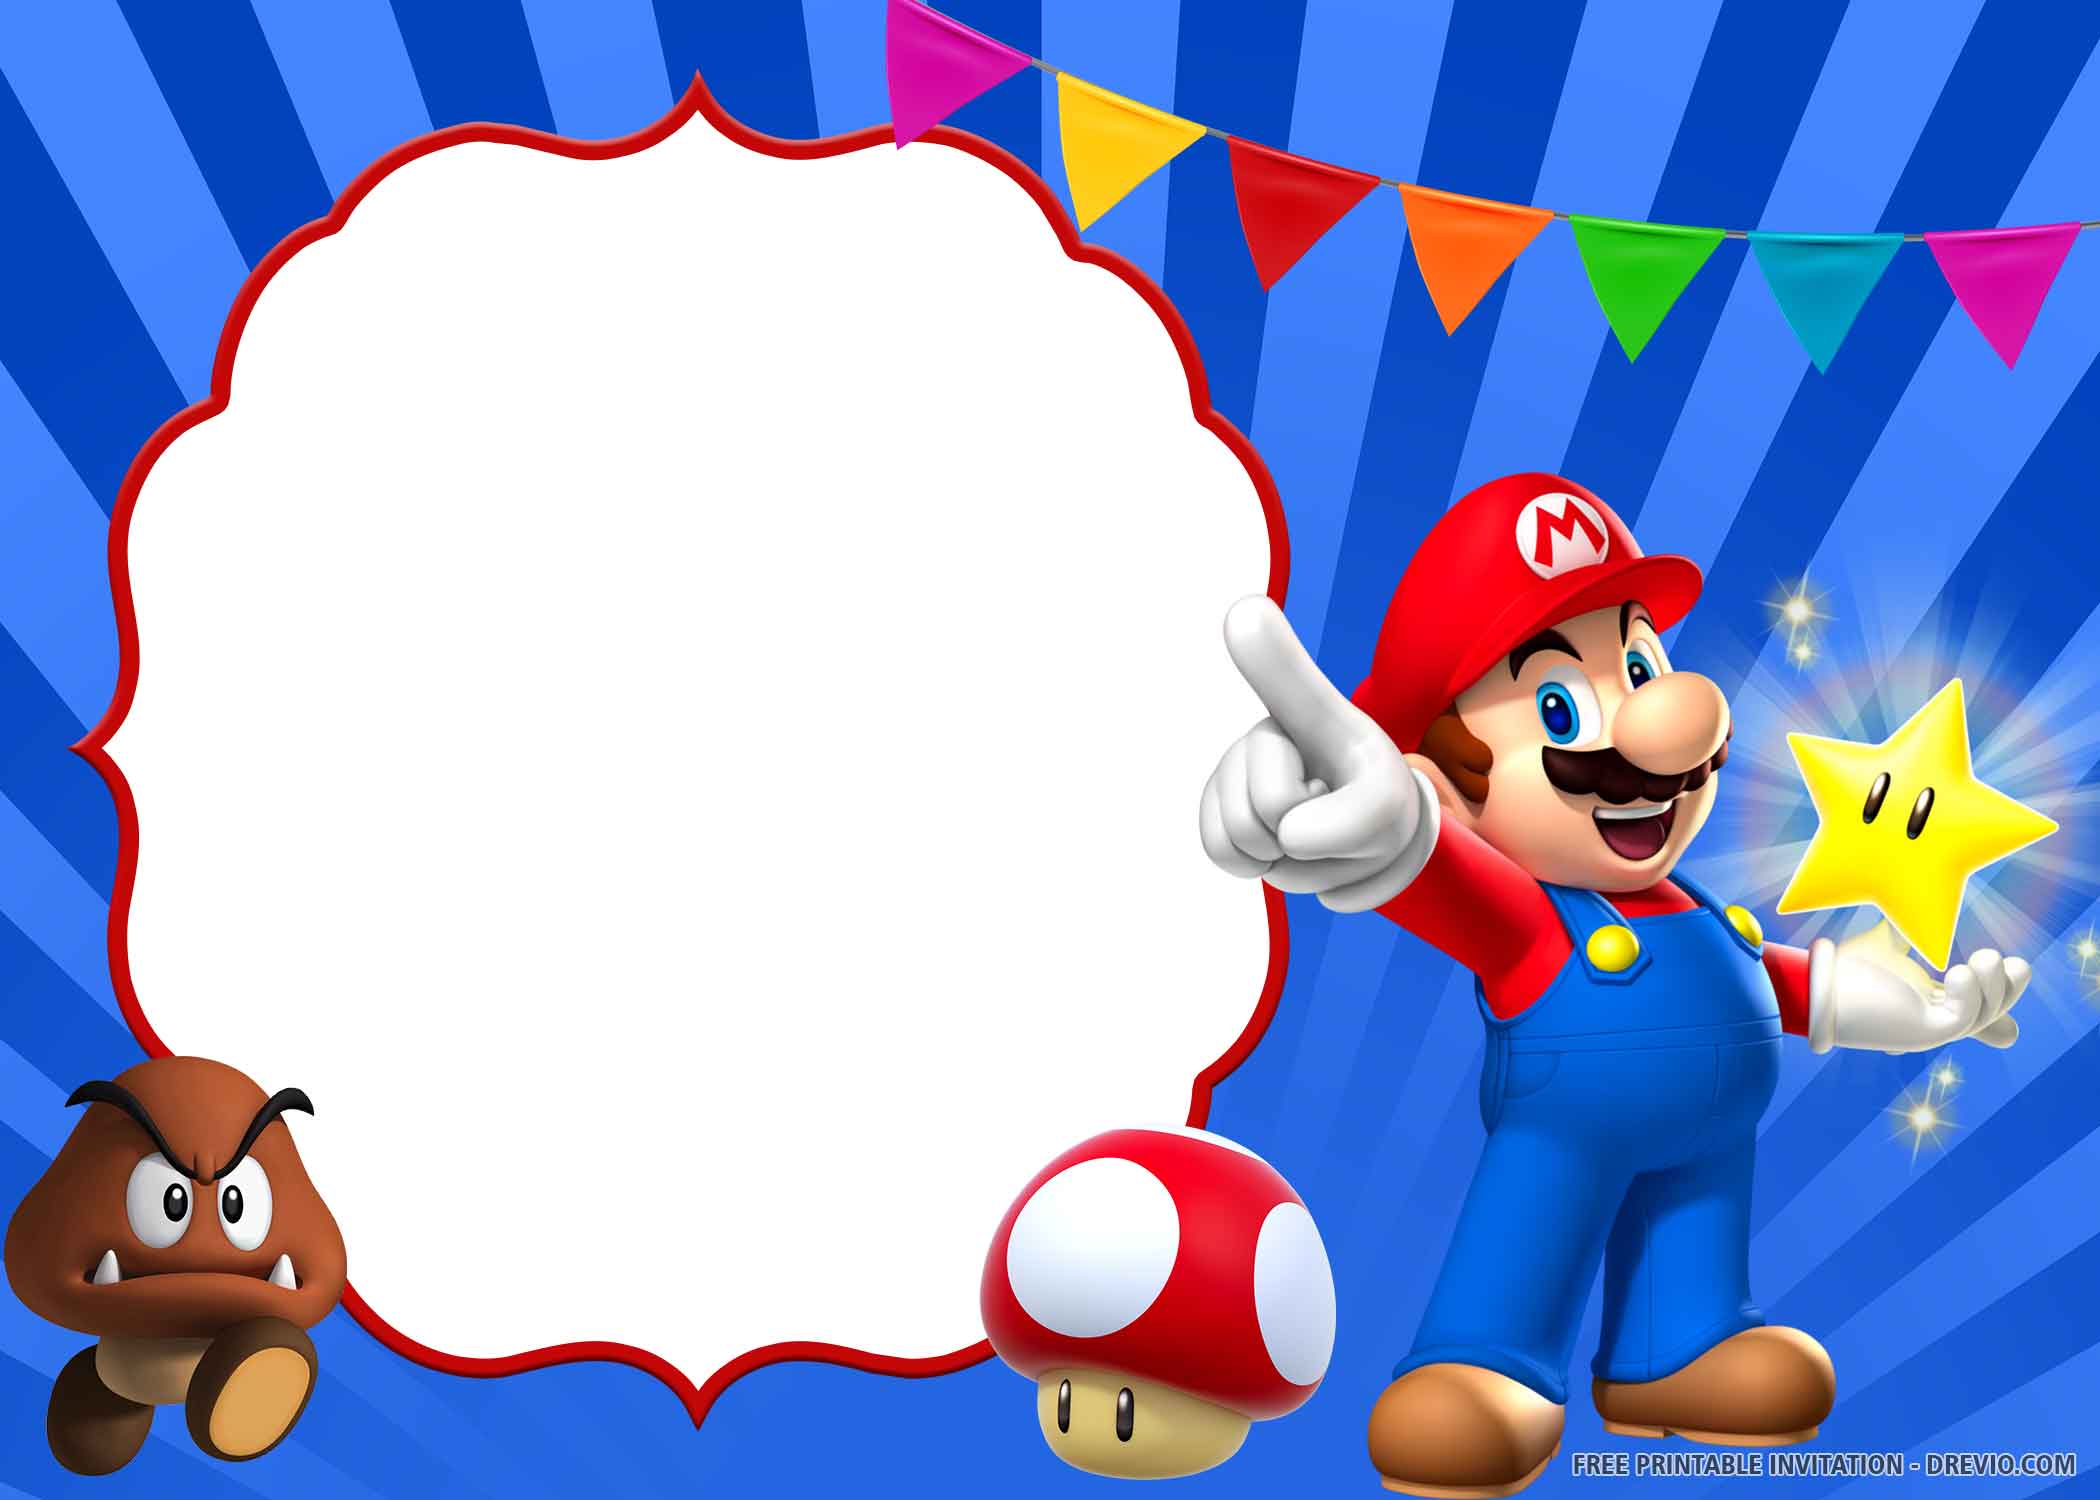 FREE PRINTABLE) – Super Mario Birthday Invitation Templates | Download  Hundreds FREE PRINTABLE Birthday Invitation Templates